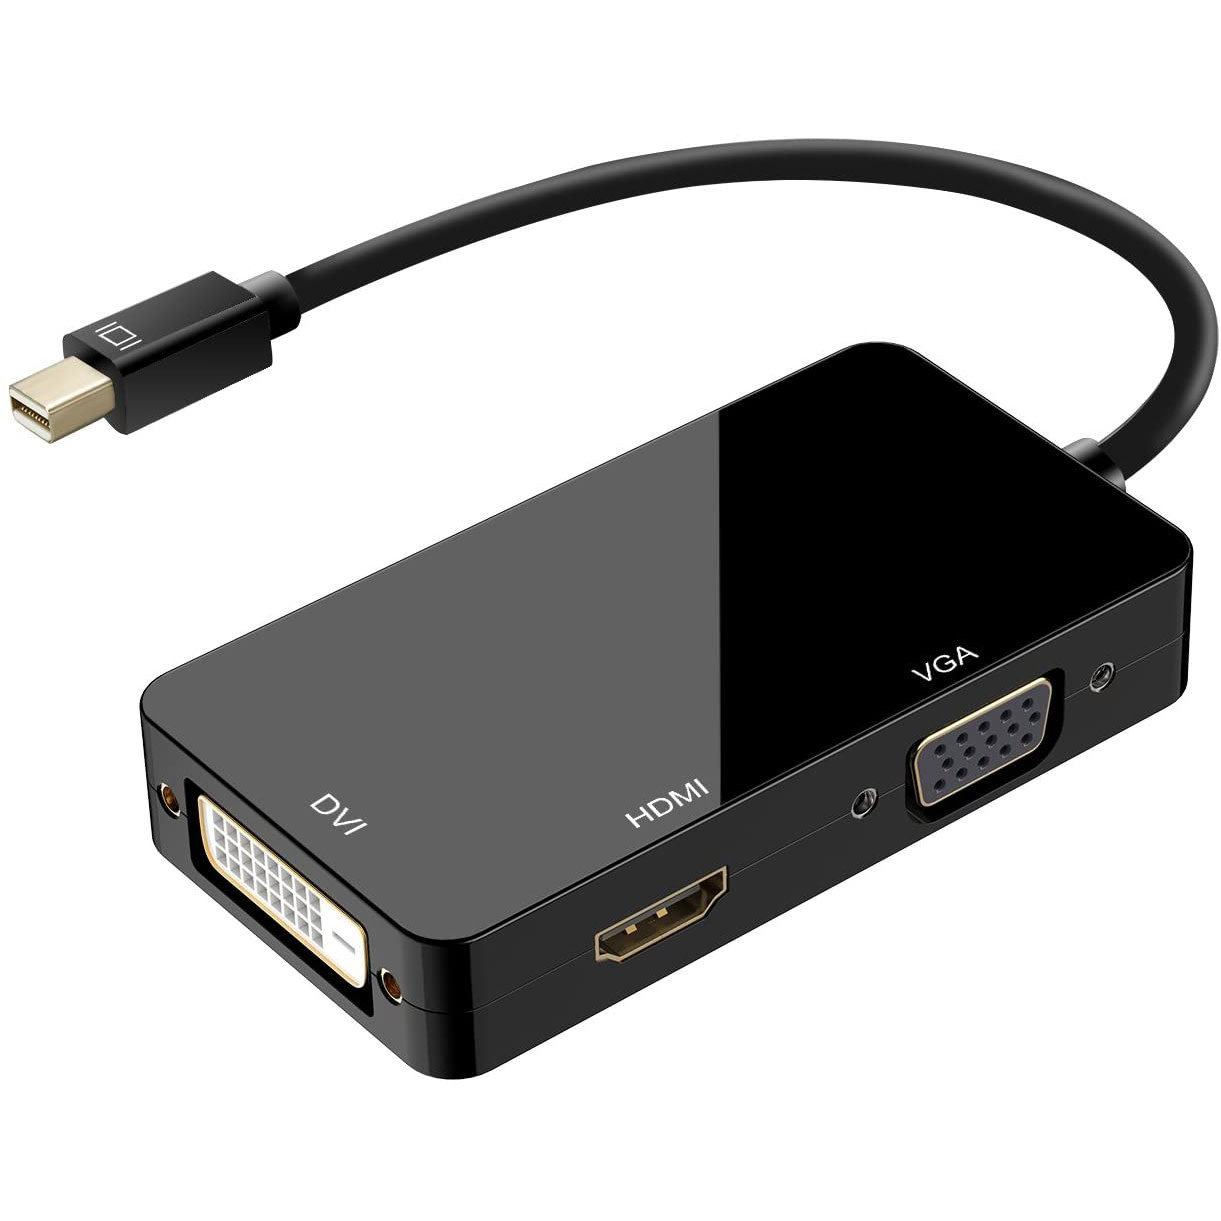 Mini DisplayPort (Thunderbolt Port Compatible) to HDMI/DVI/VGA Male to Adapter Black - NWCA Inc.